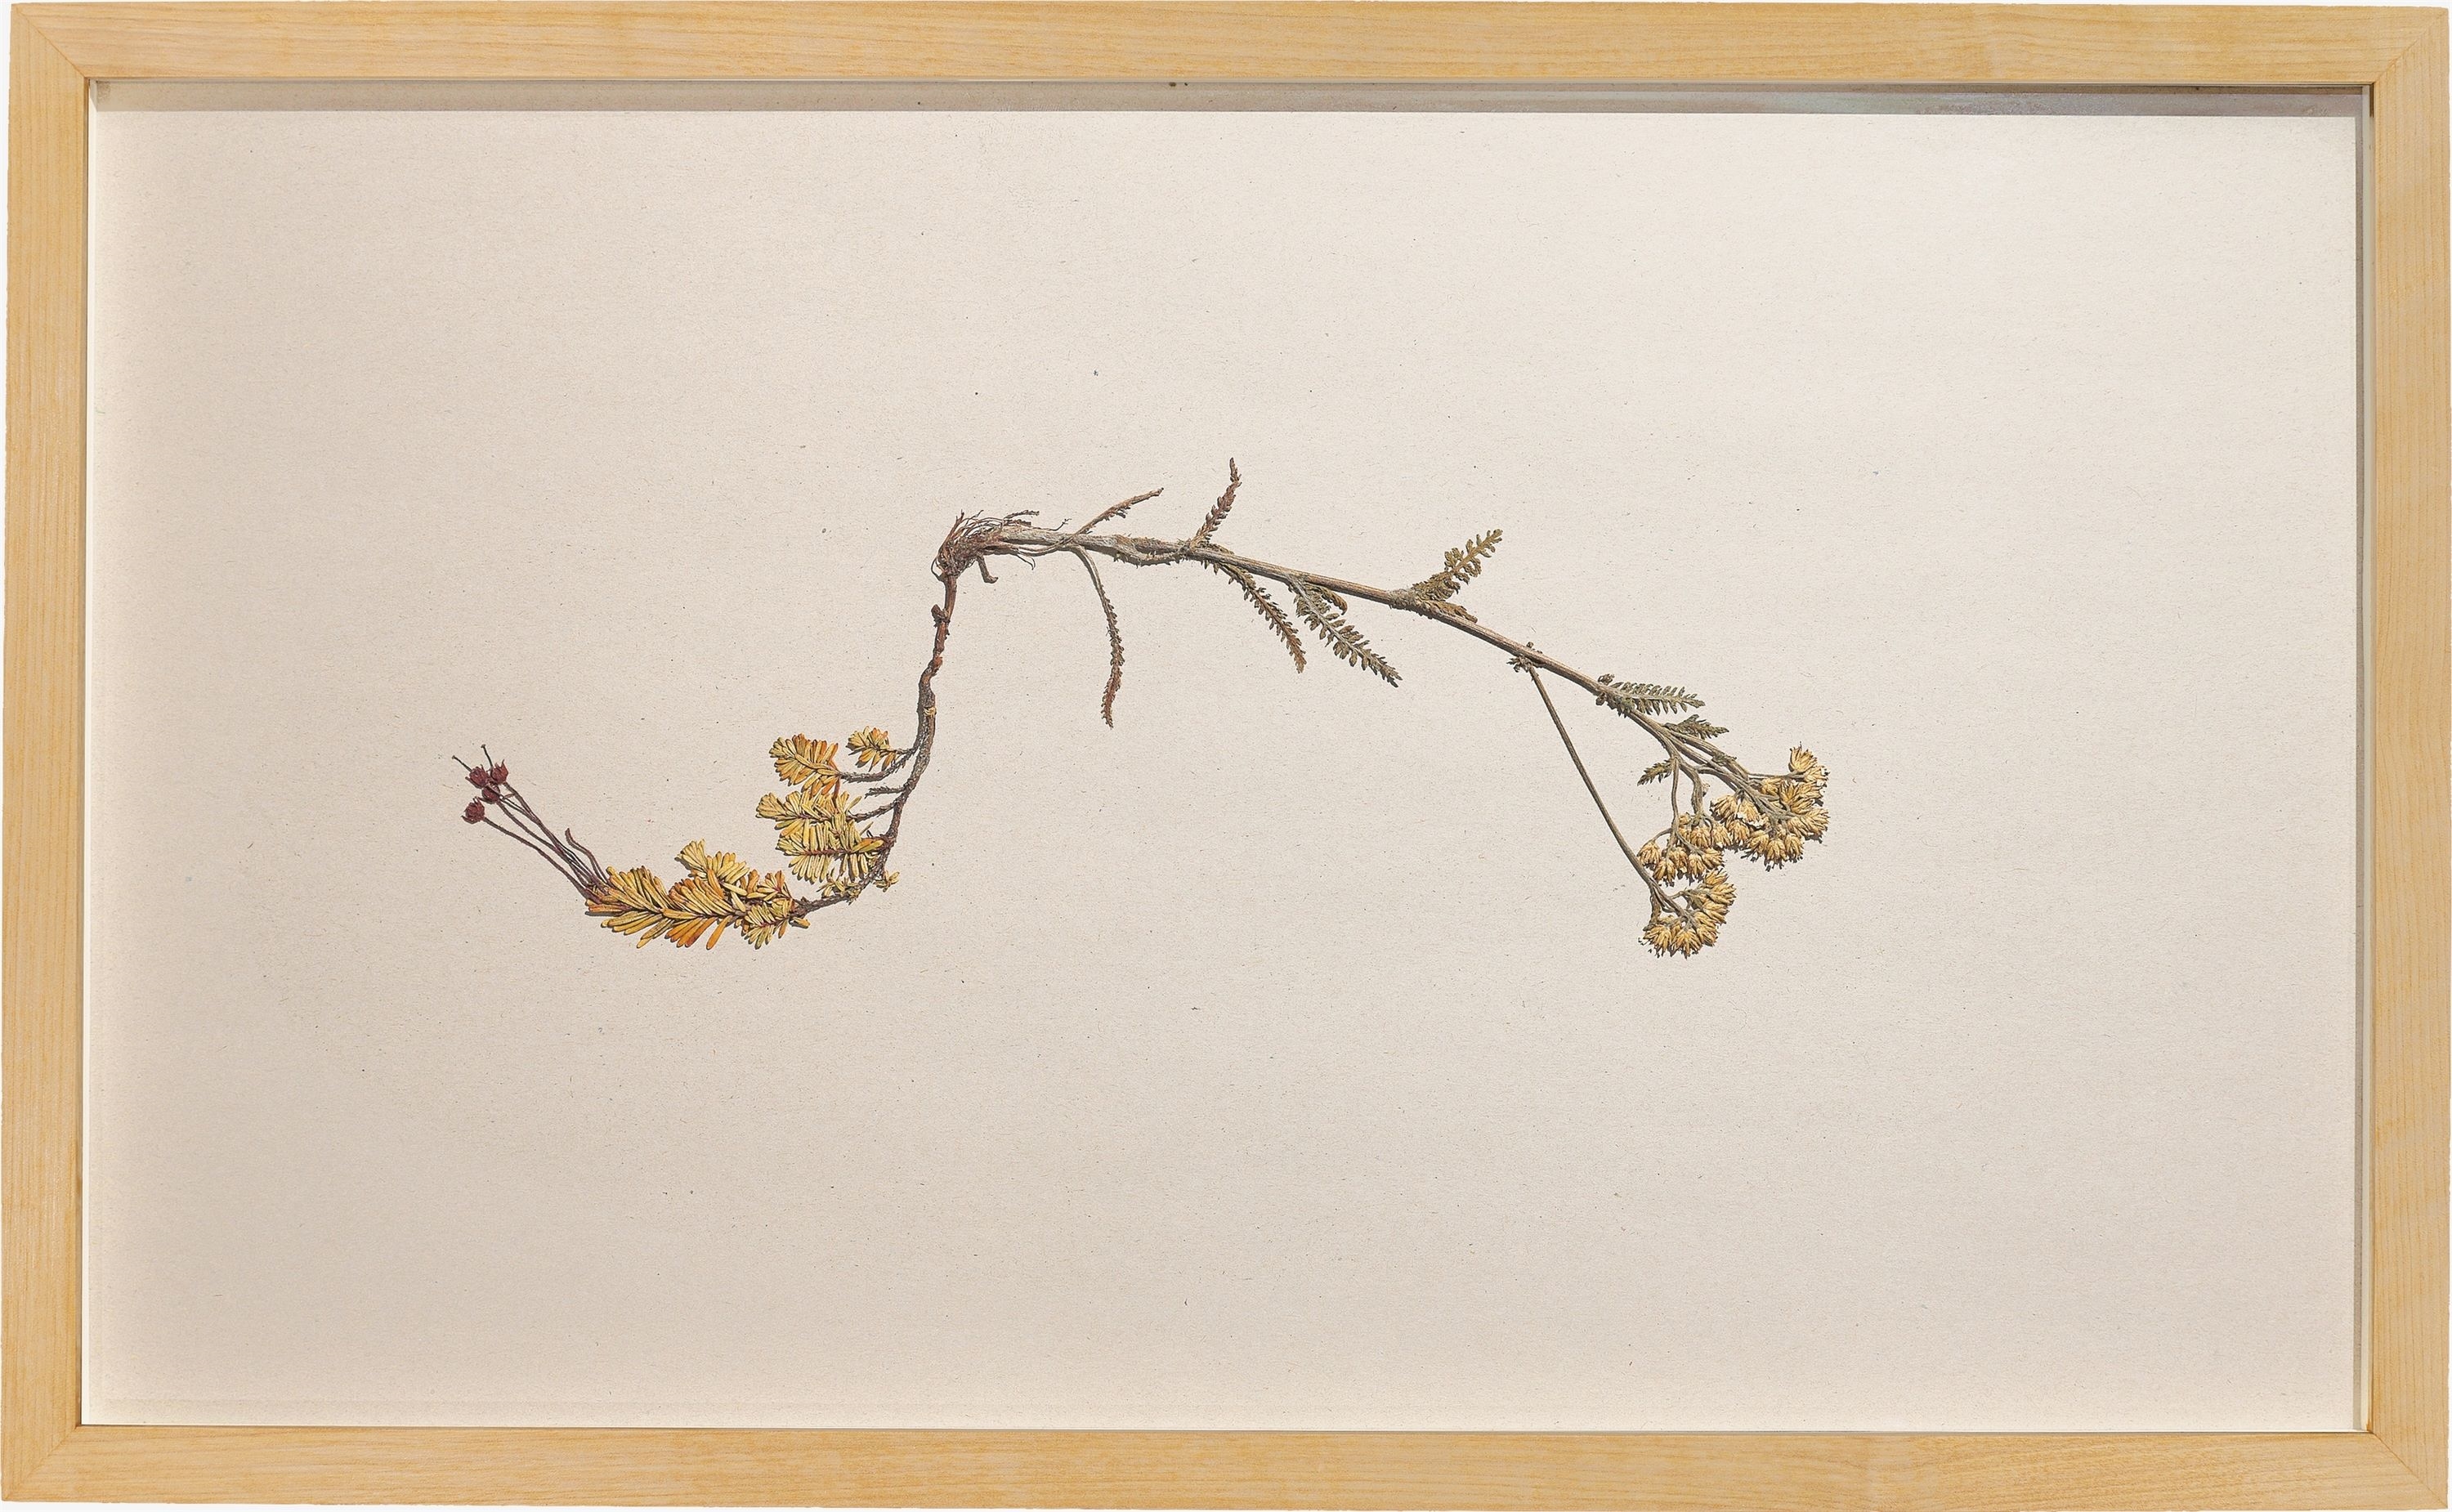 Artwork by Helen Mirra, ”Phyllodoce caerulea & Achillea millefolium (Blue heath & Yarrow)”., Made of pressed plant on cardboard